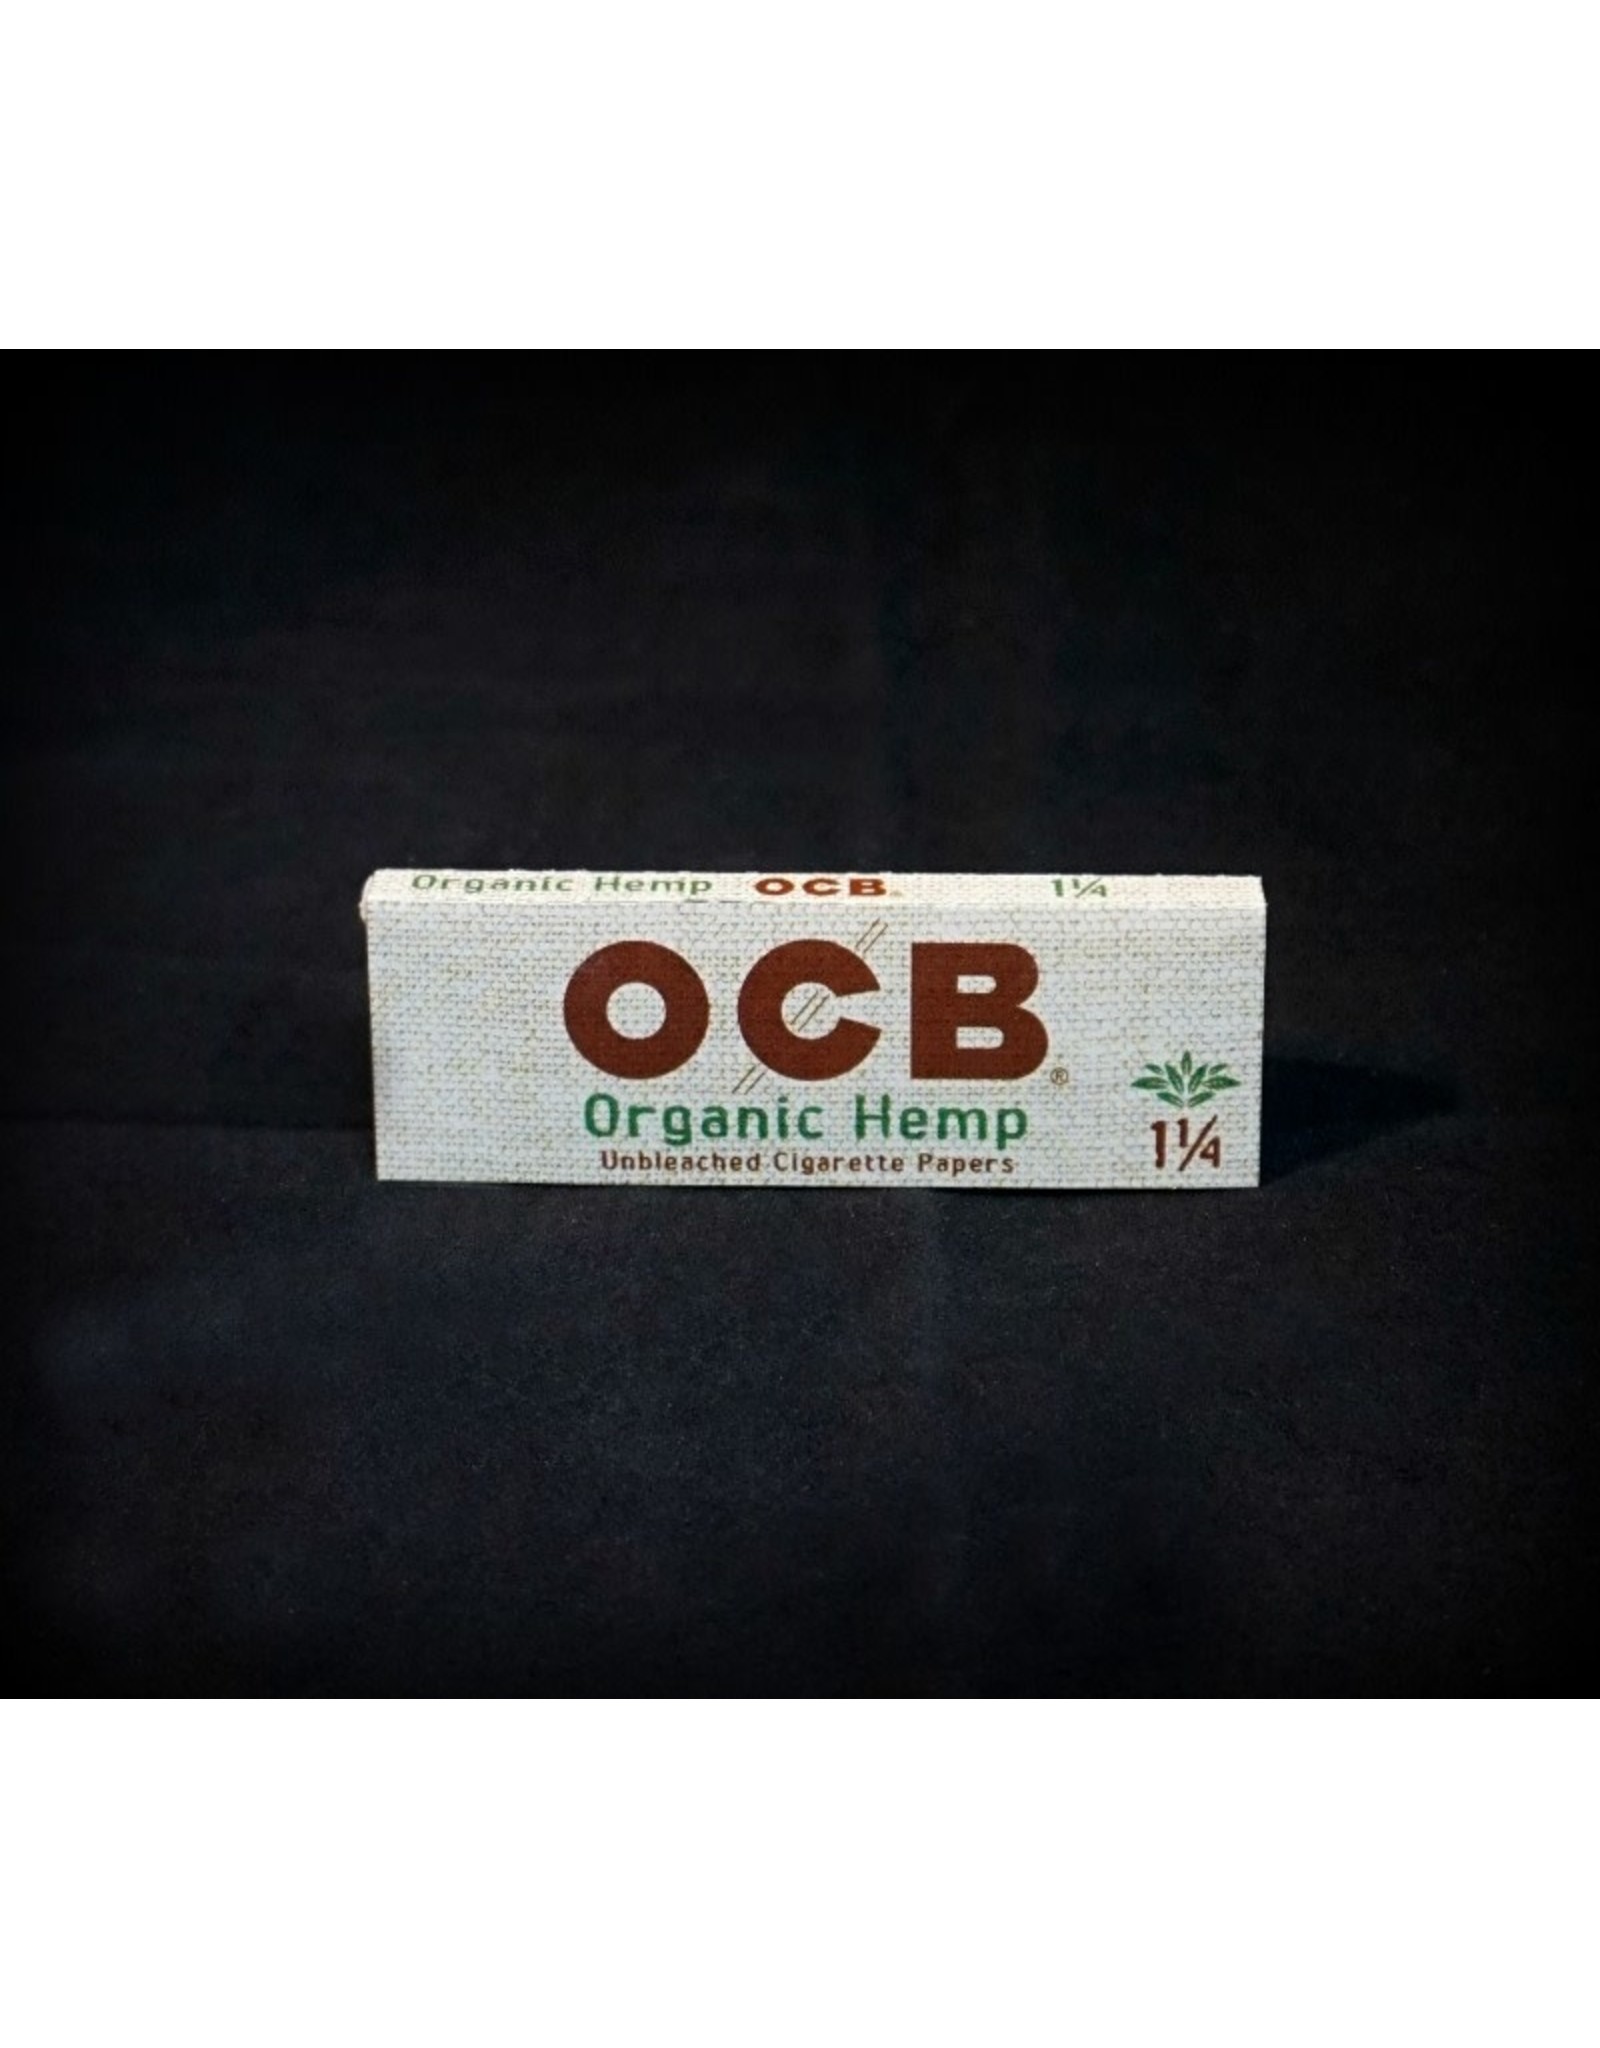 OCB OCB Organic Hemp Papers 1.25